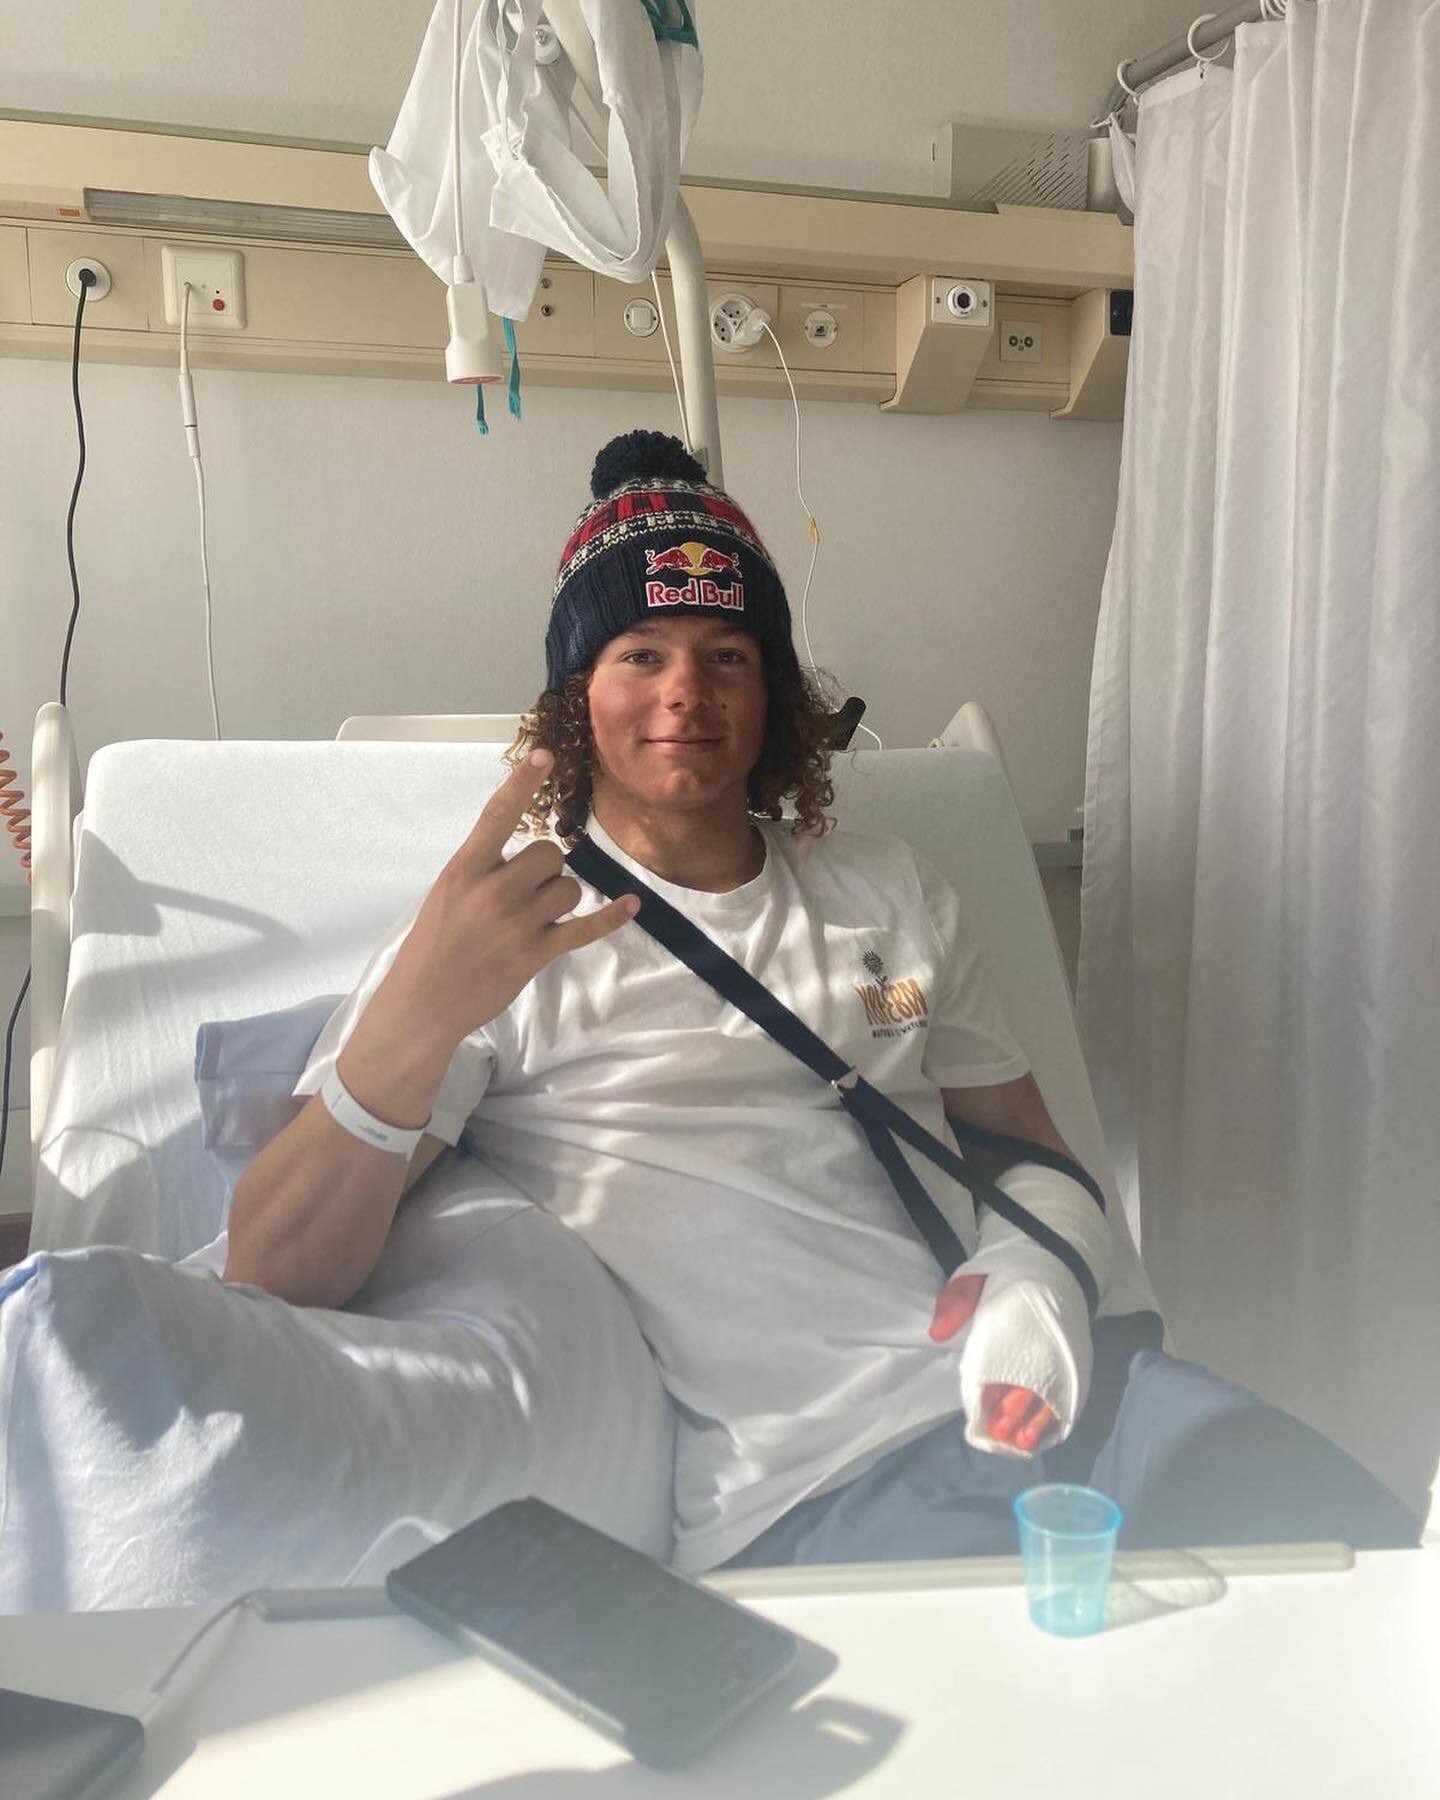 Dalmeny snowboarding ace Valentino Guseli breaks wrist in scary fall in Switzerland